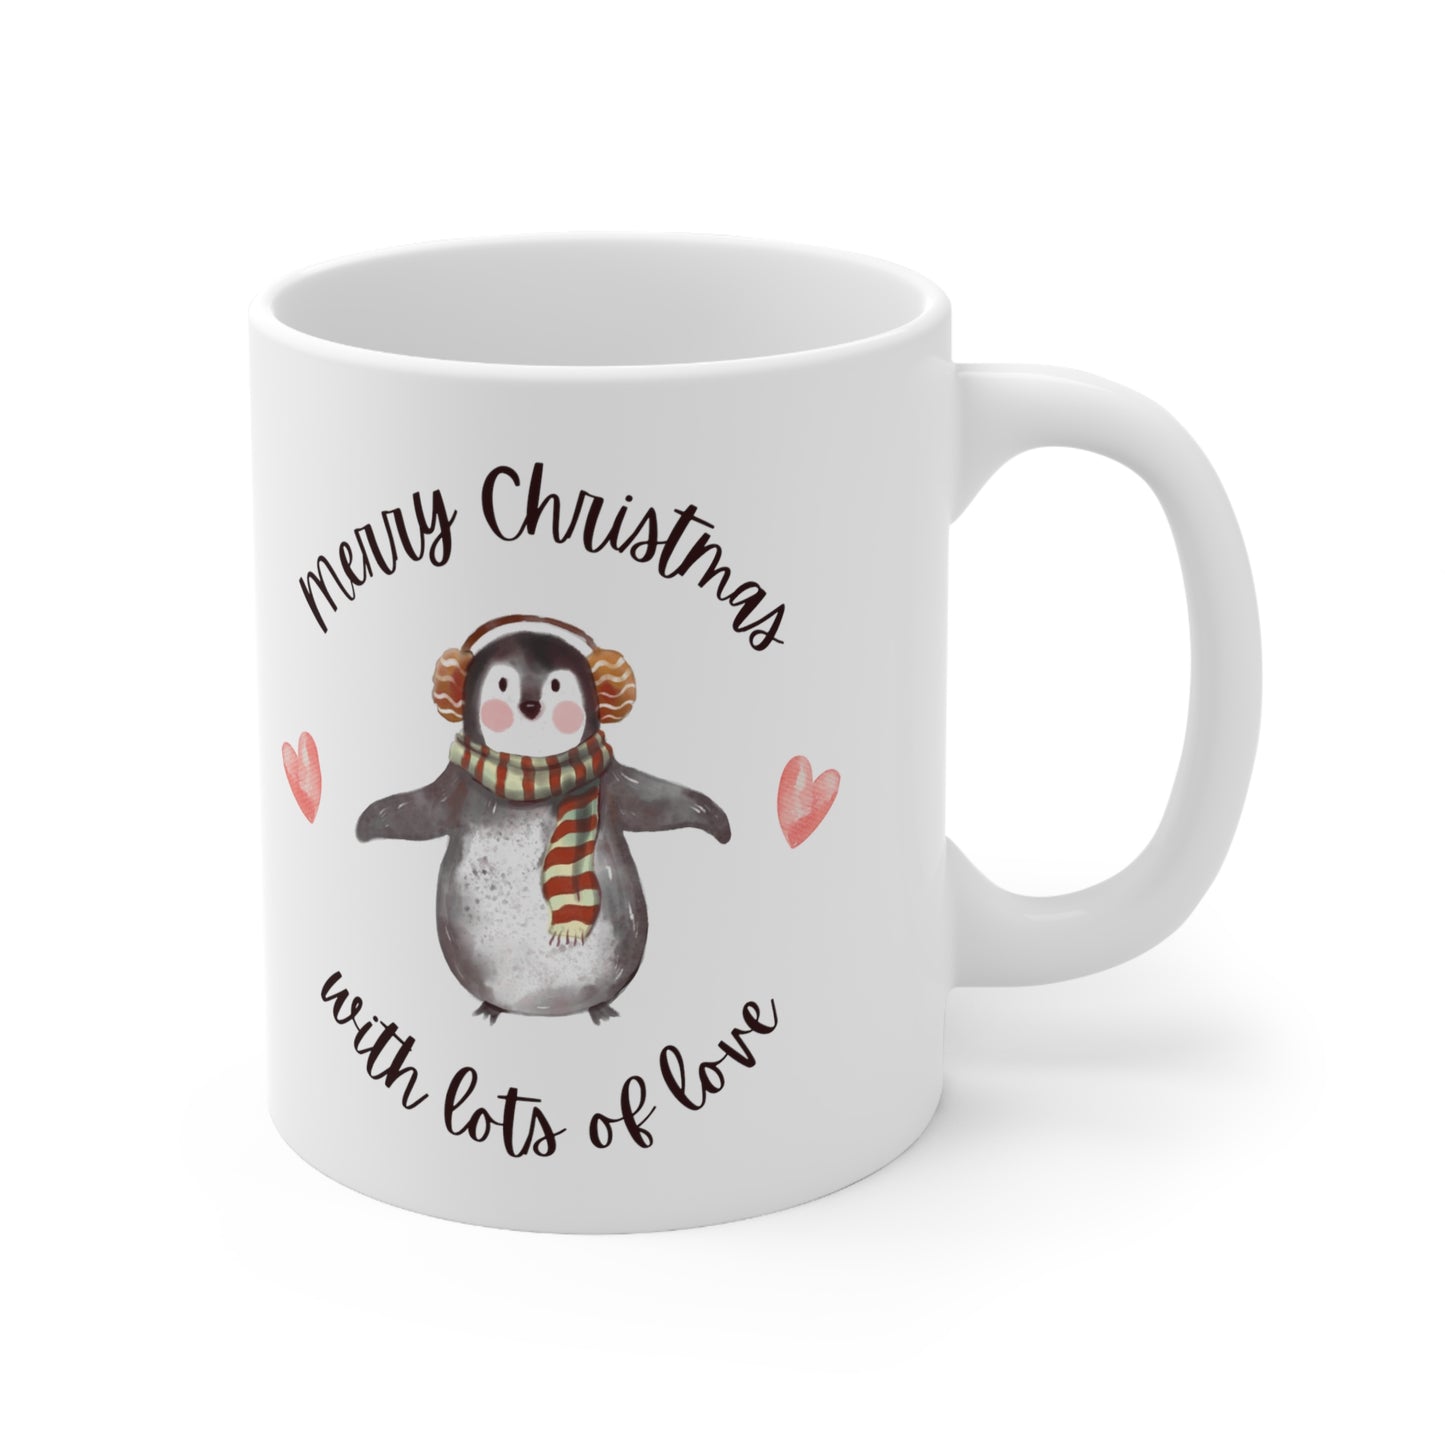 Merry Christmas with Lots of Love Printed Ceramic Mug, (11, 15oz))